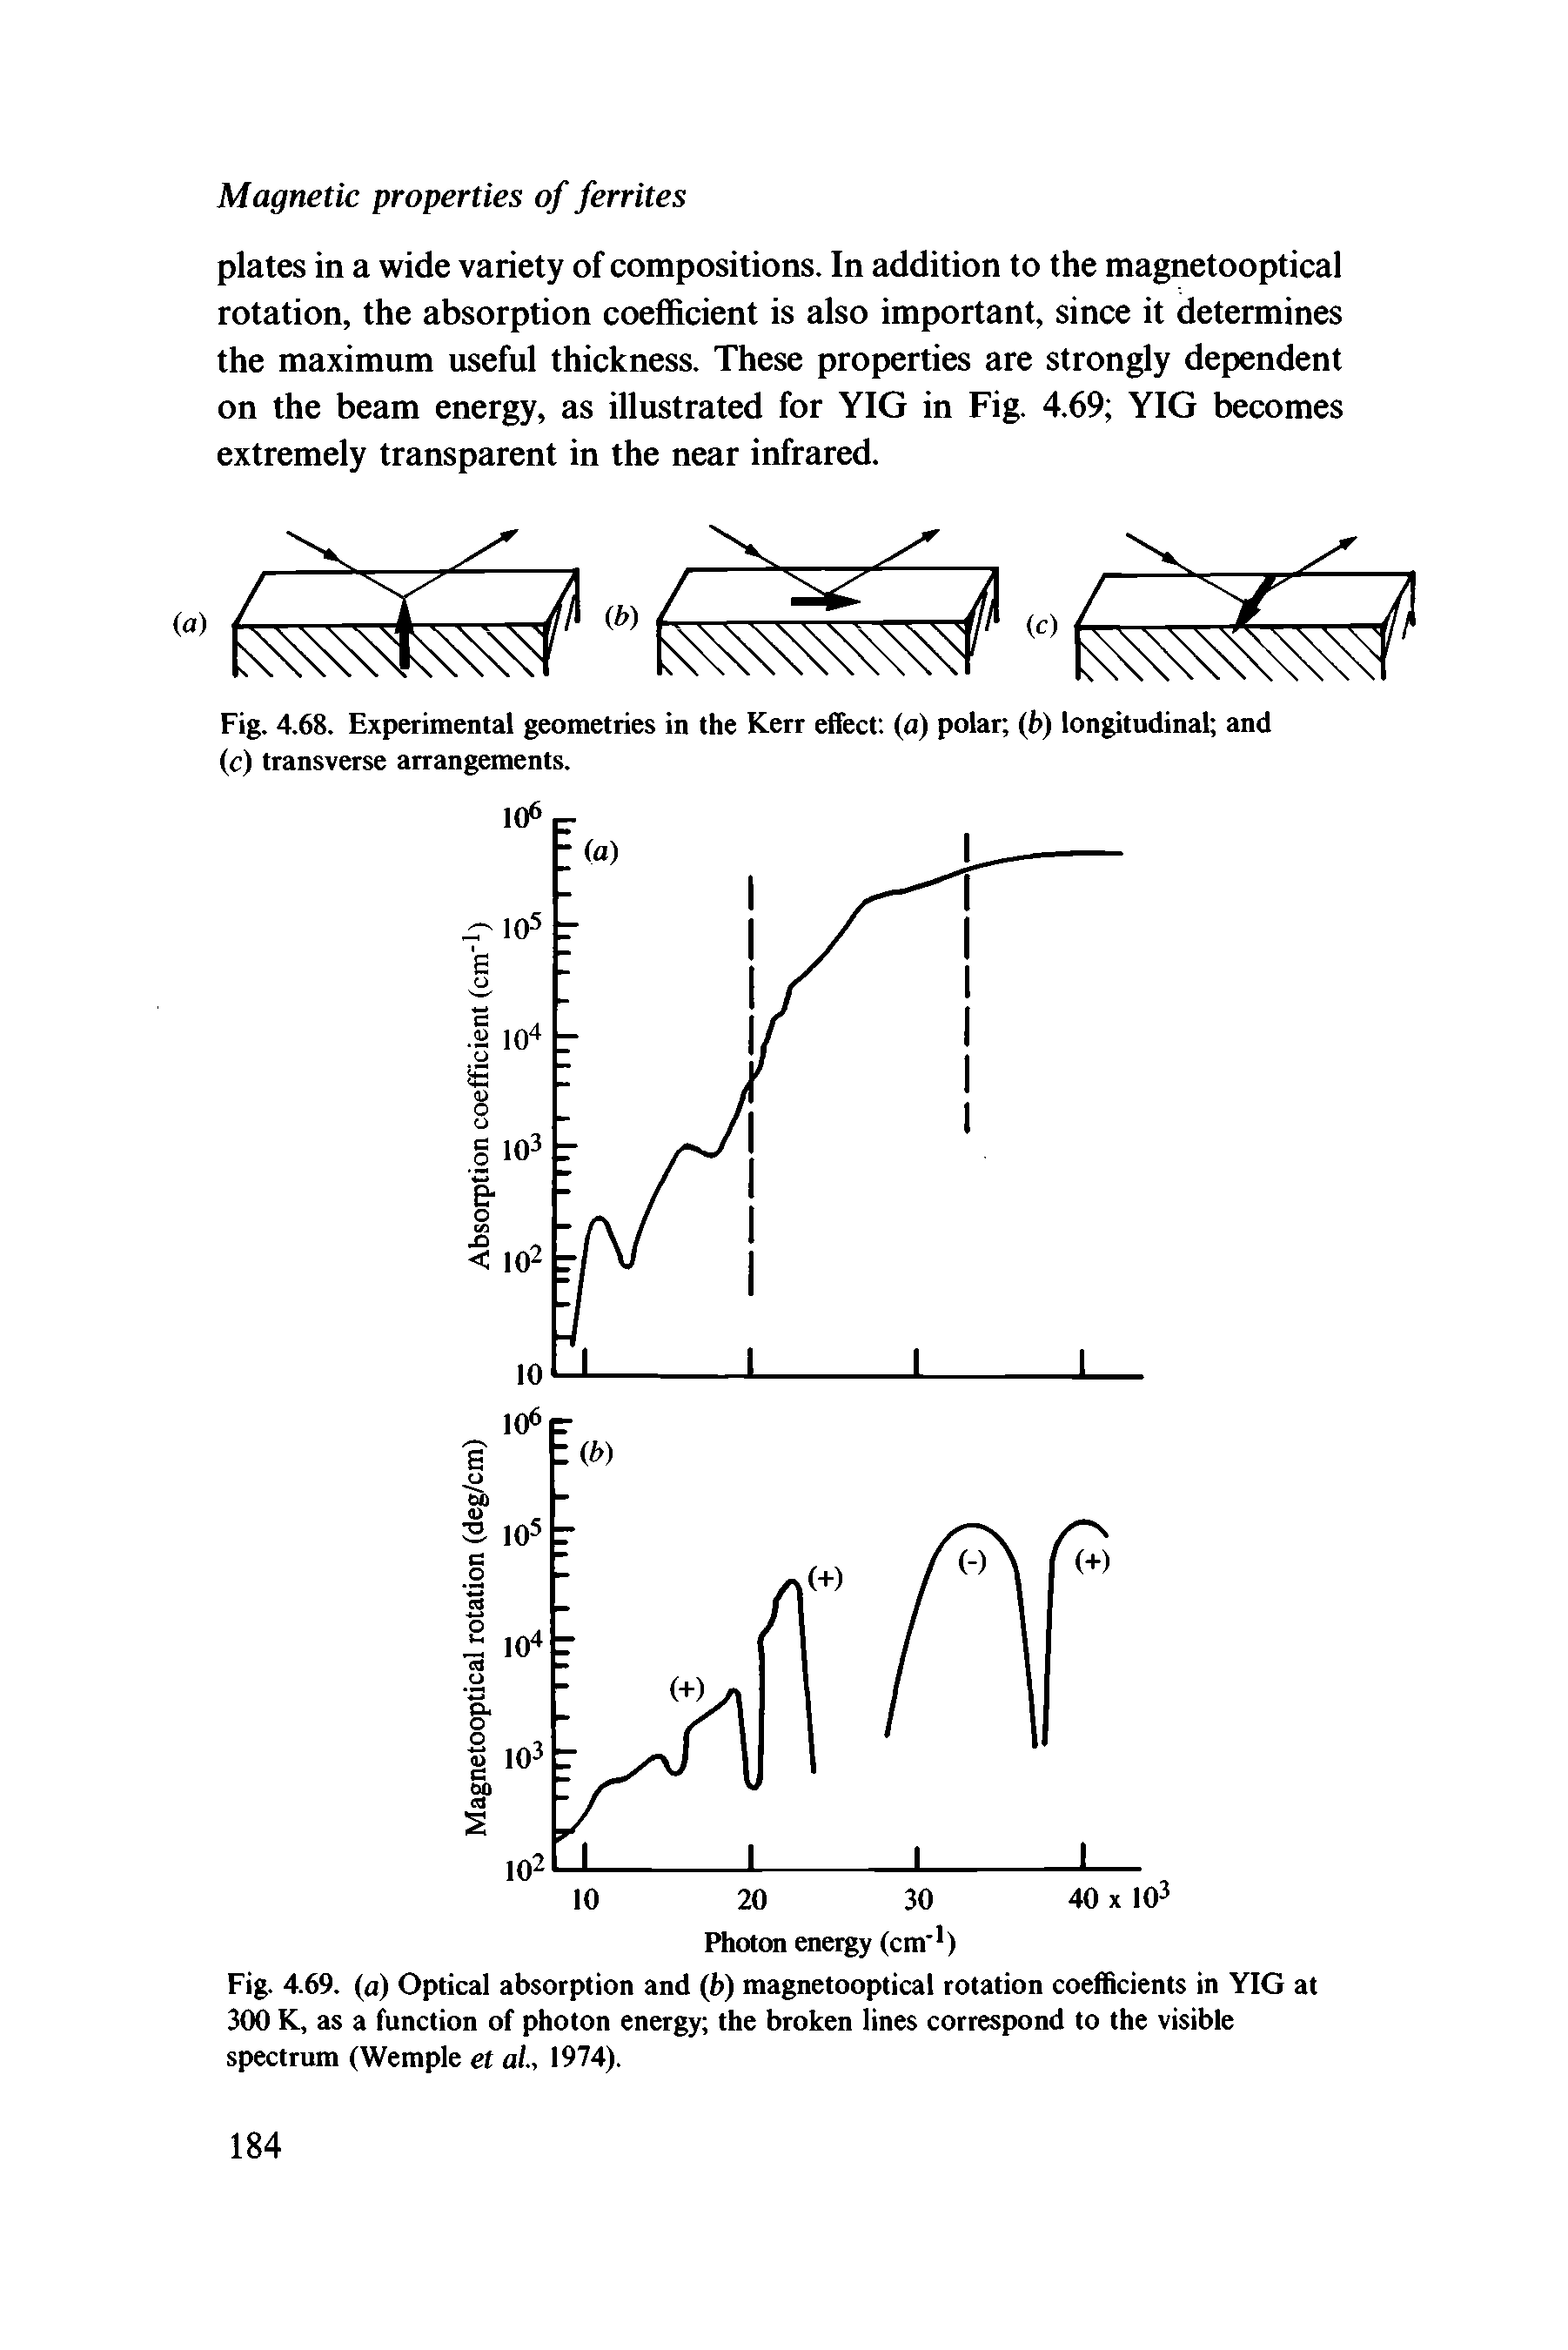 Fig. 4.68. Experimental geometries in the Kerr effect (a) polar (f>) longitudinal and (c) transverse arrangements.